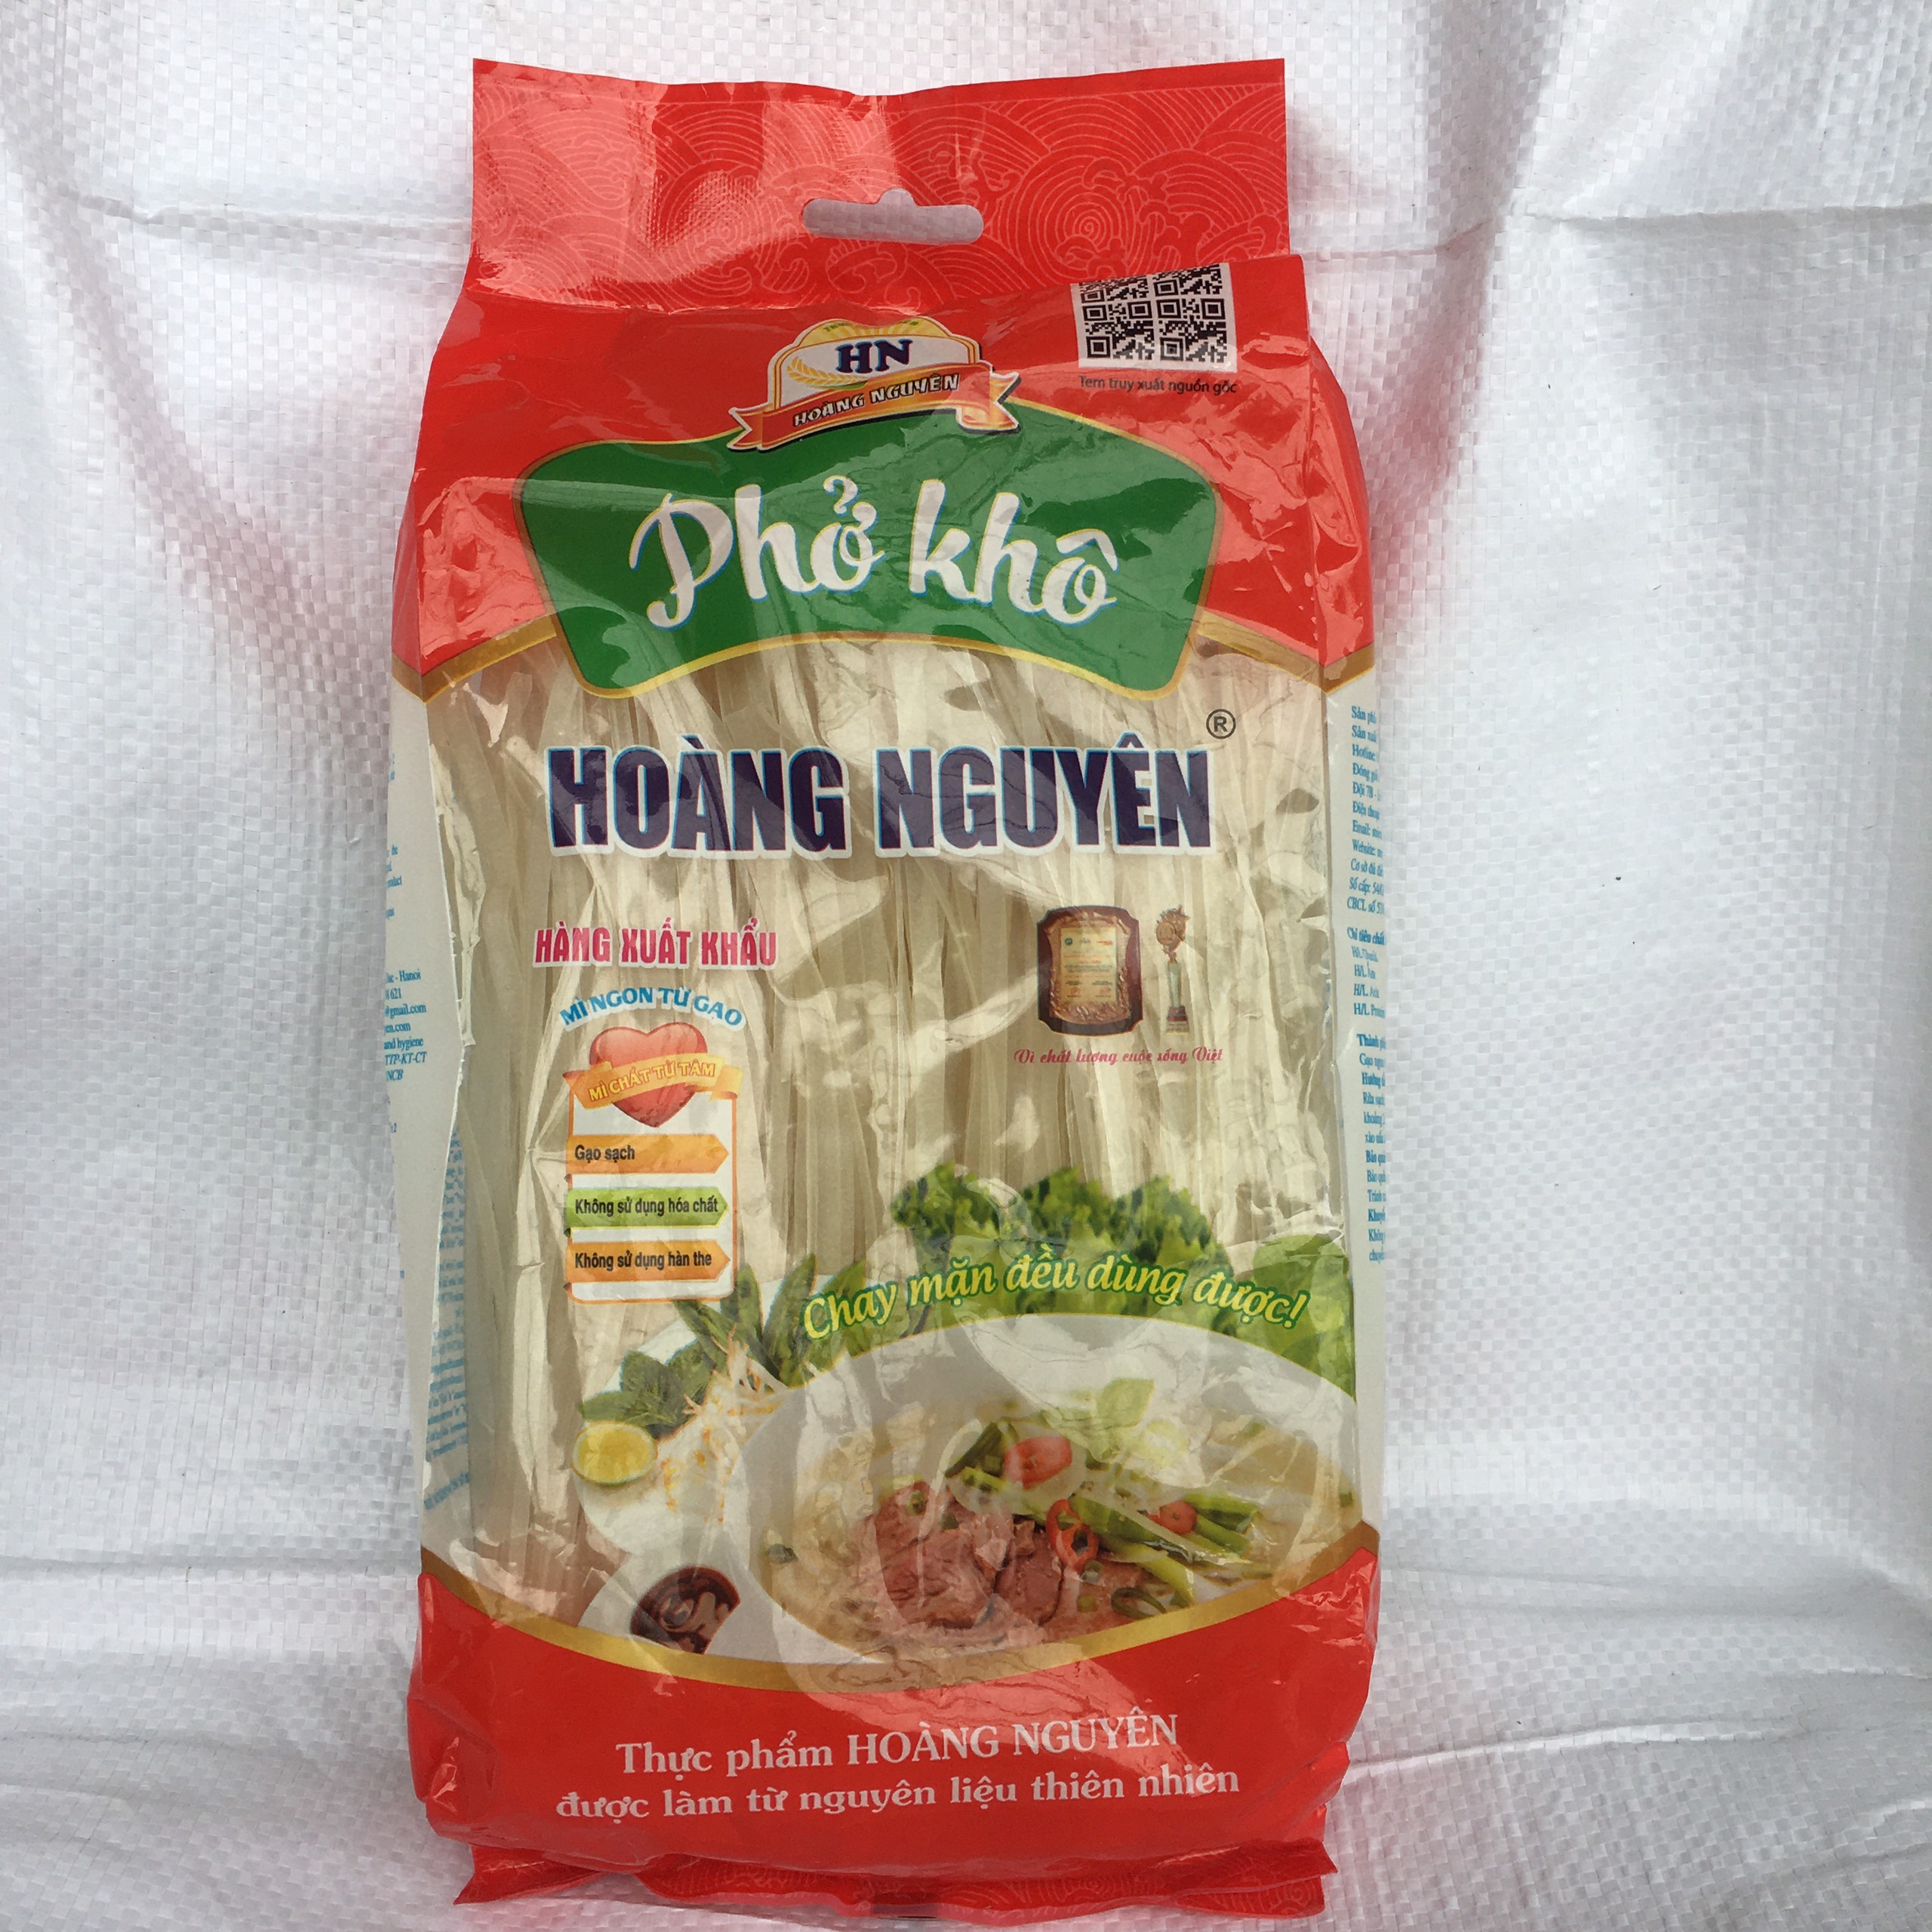 Dried Flat Noodles Flat Rice Noodles Rice Vermicelli Noodles Hot Deal Customized Service Food OCOP Bag Vietnam Origin 5